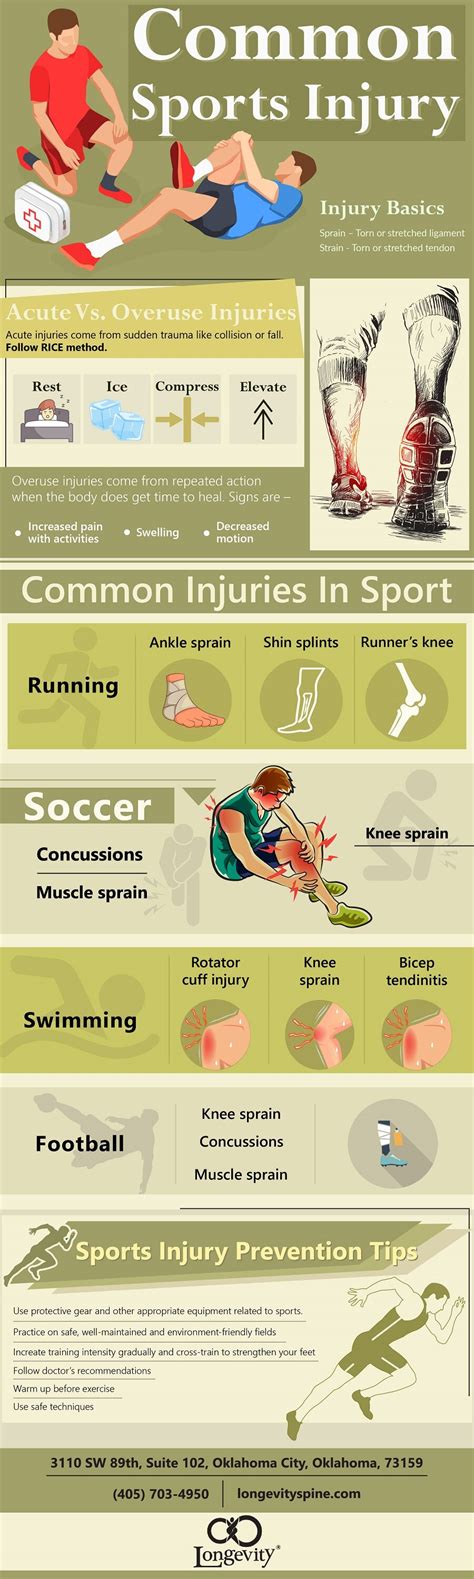 Common Sports Injury Infographic